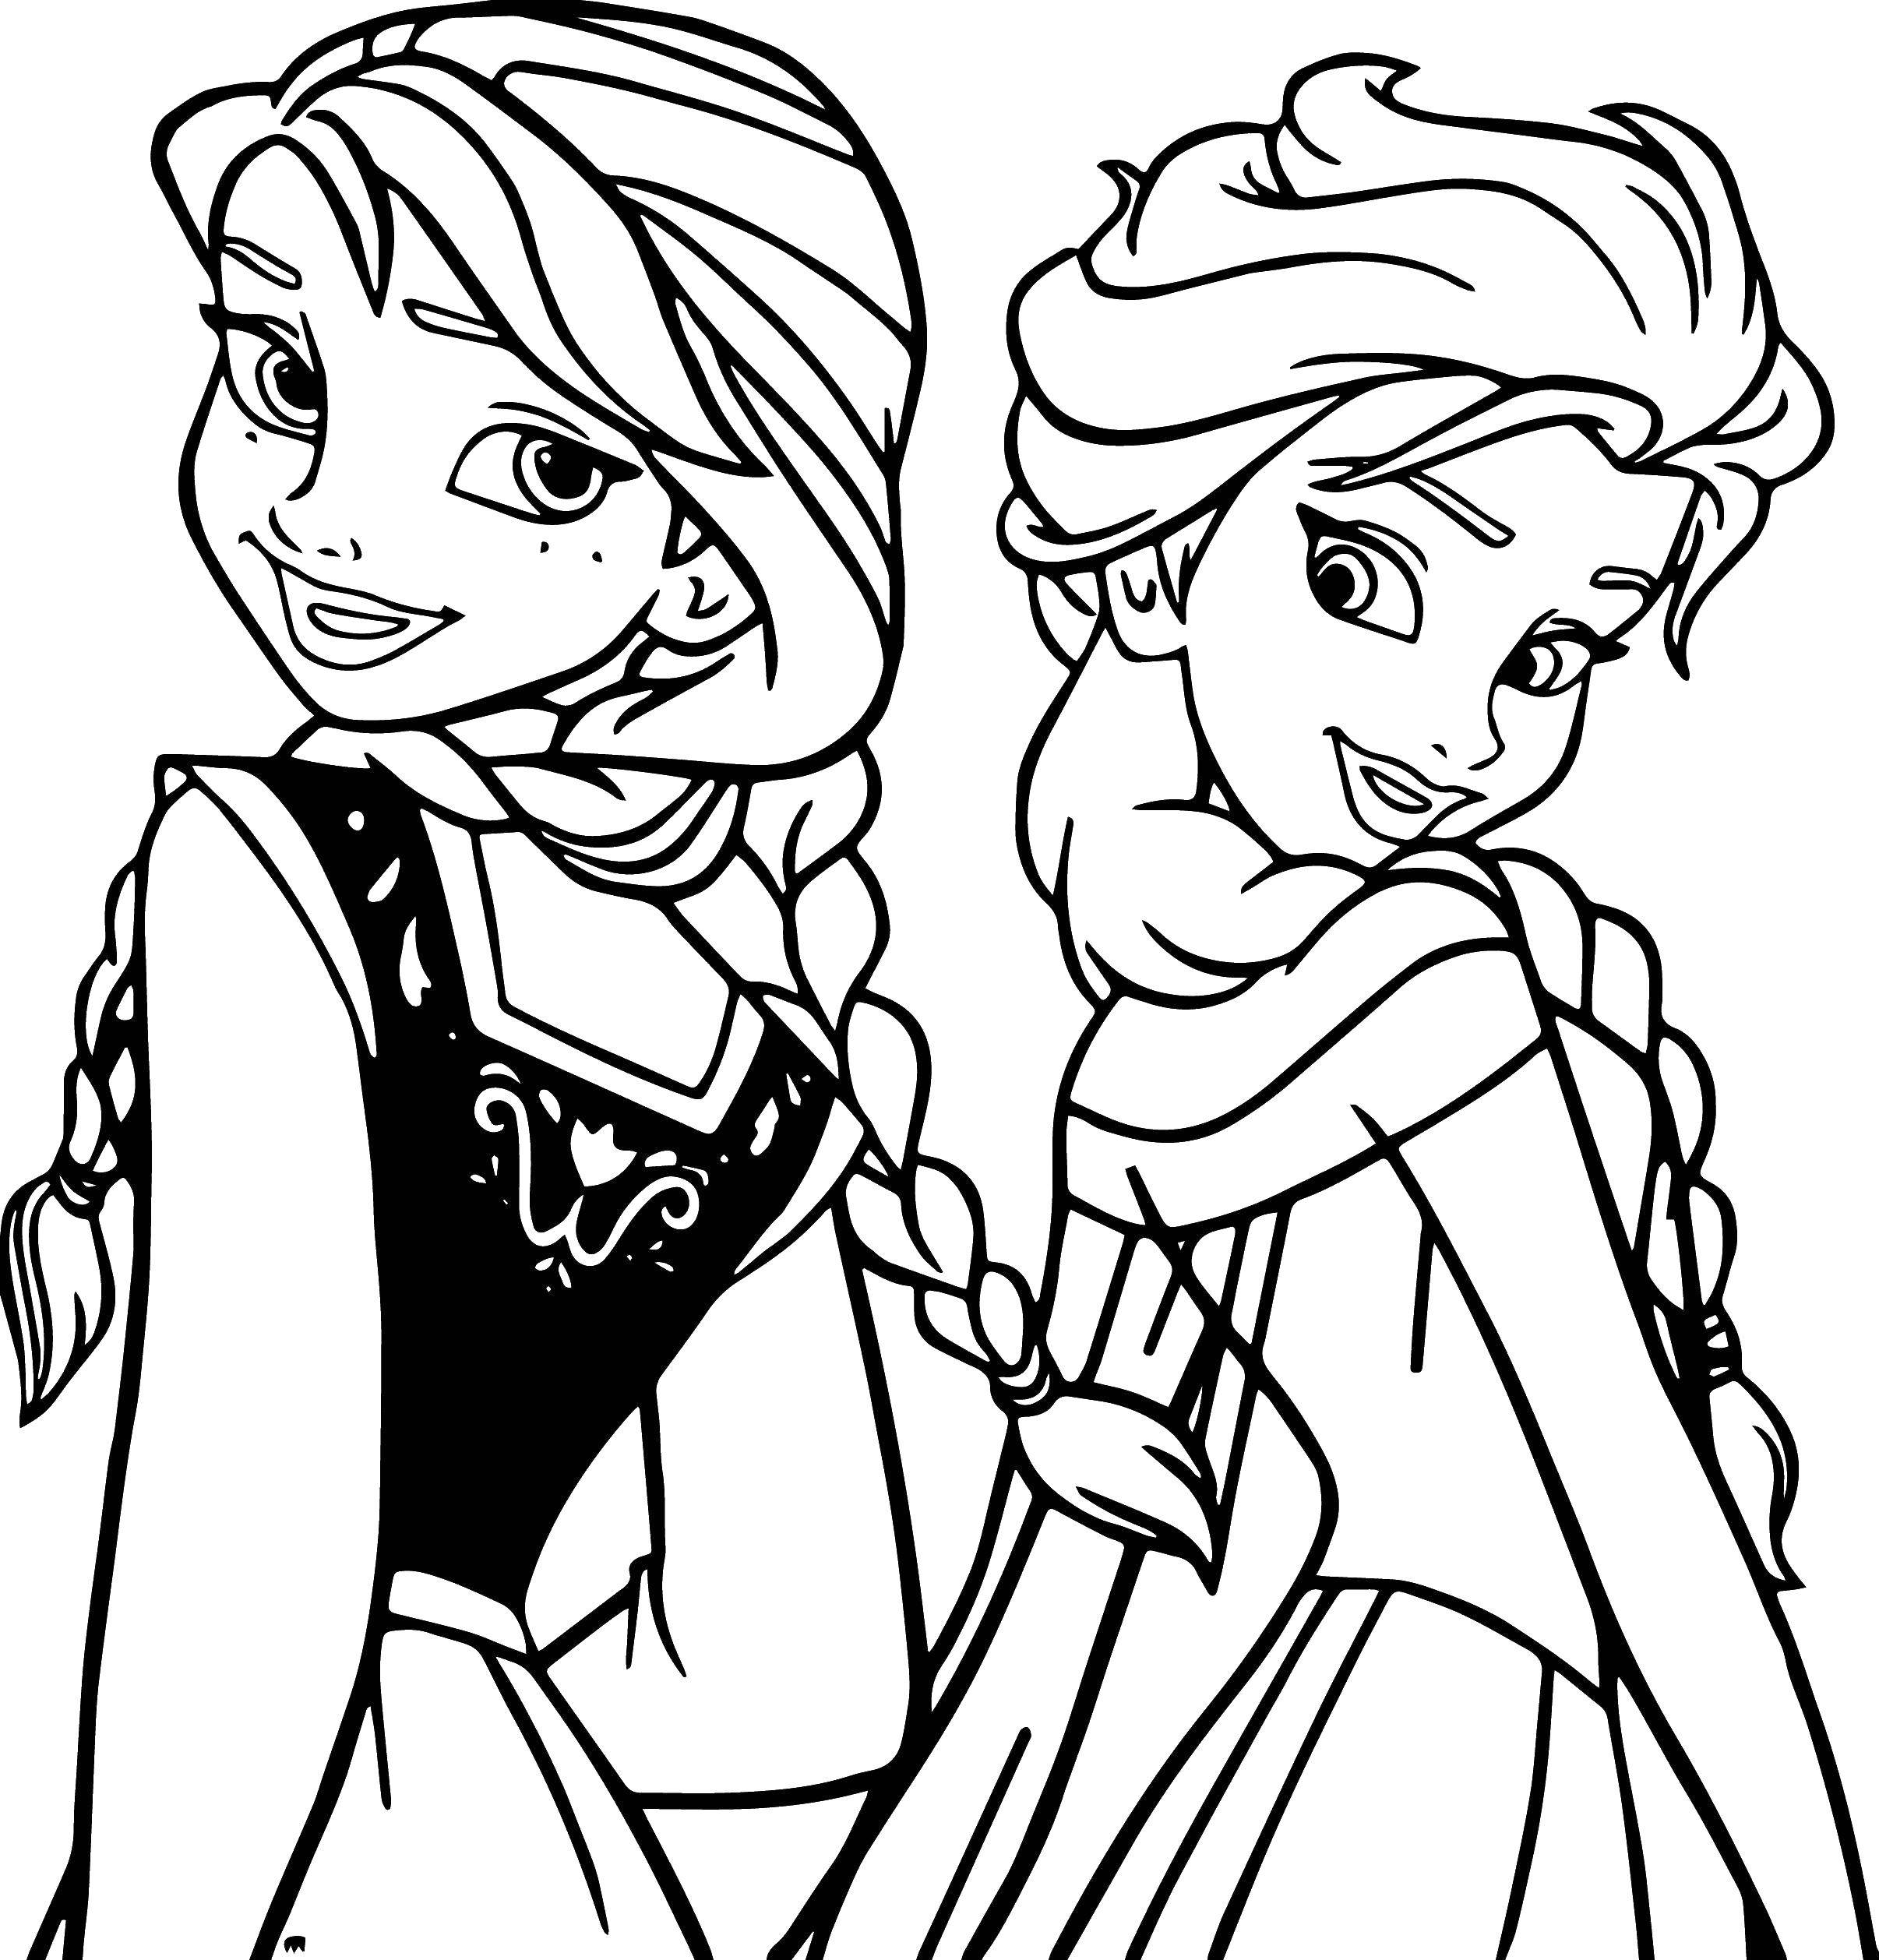 Coloring Cartoon characters cold heart . Category cartoon. Tags:  Disney, Elsa, frozen, Princess.